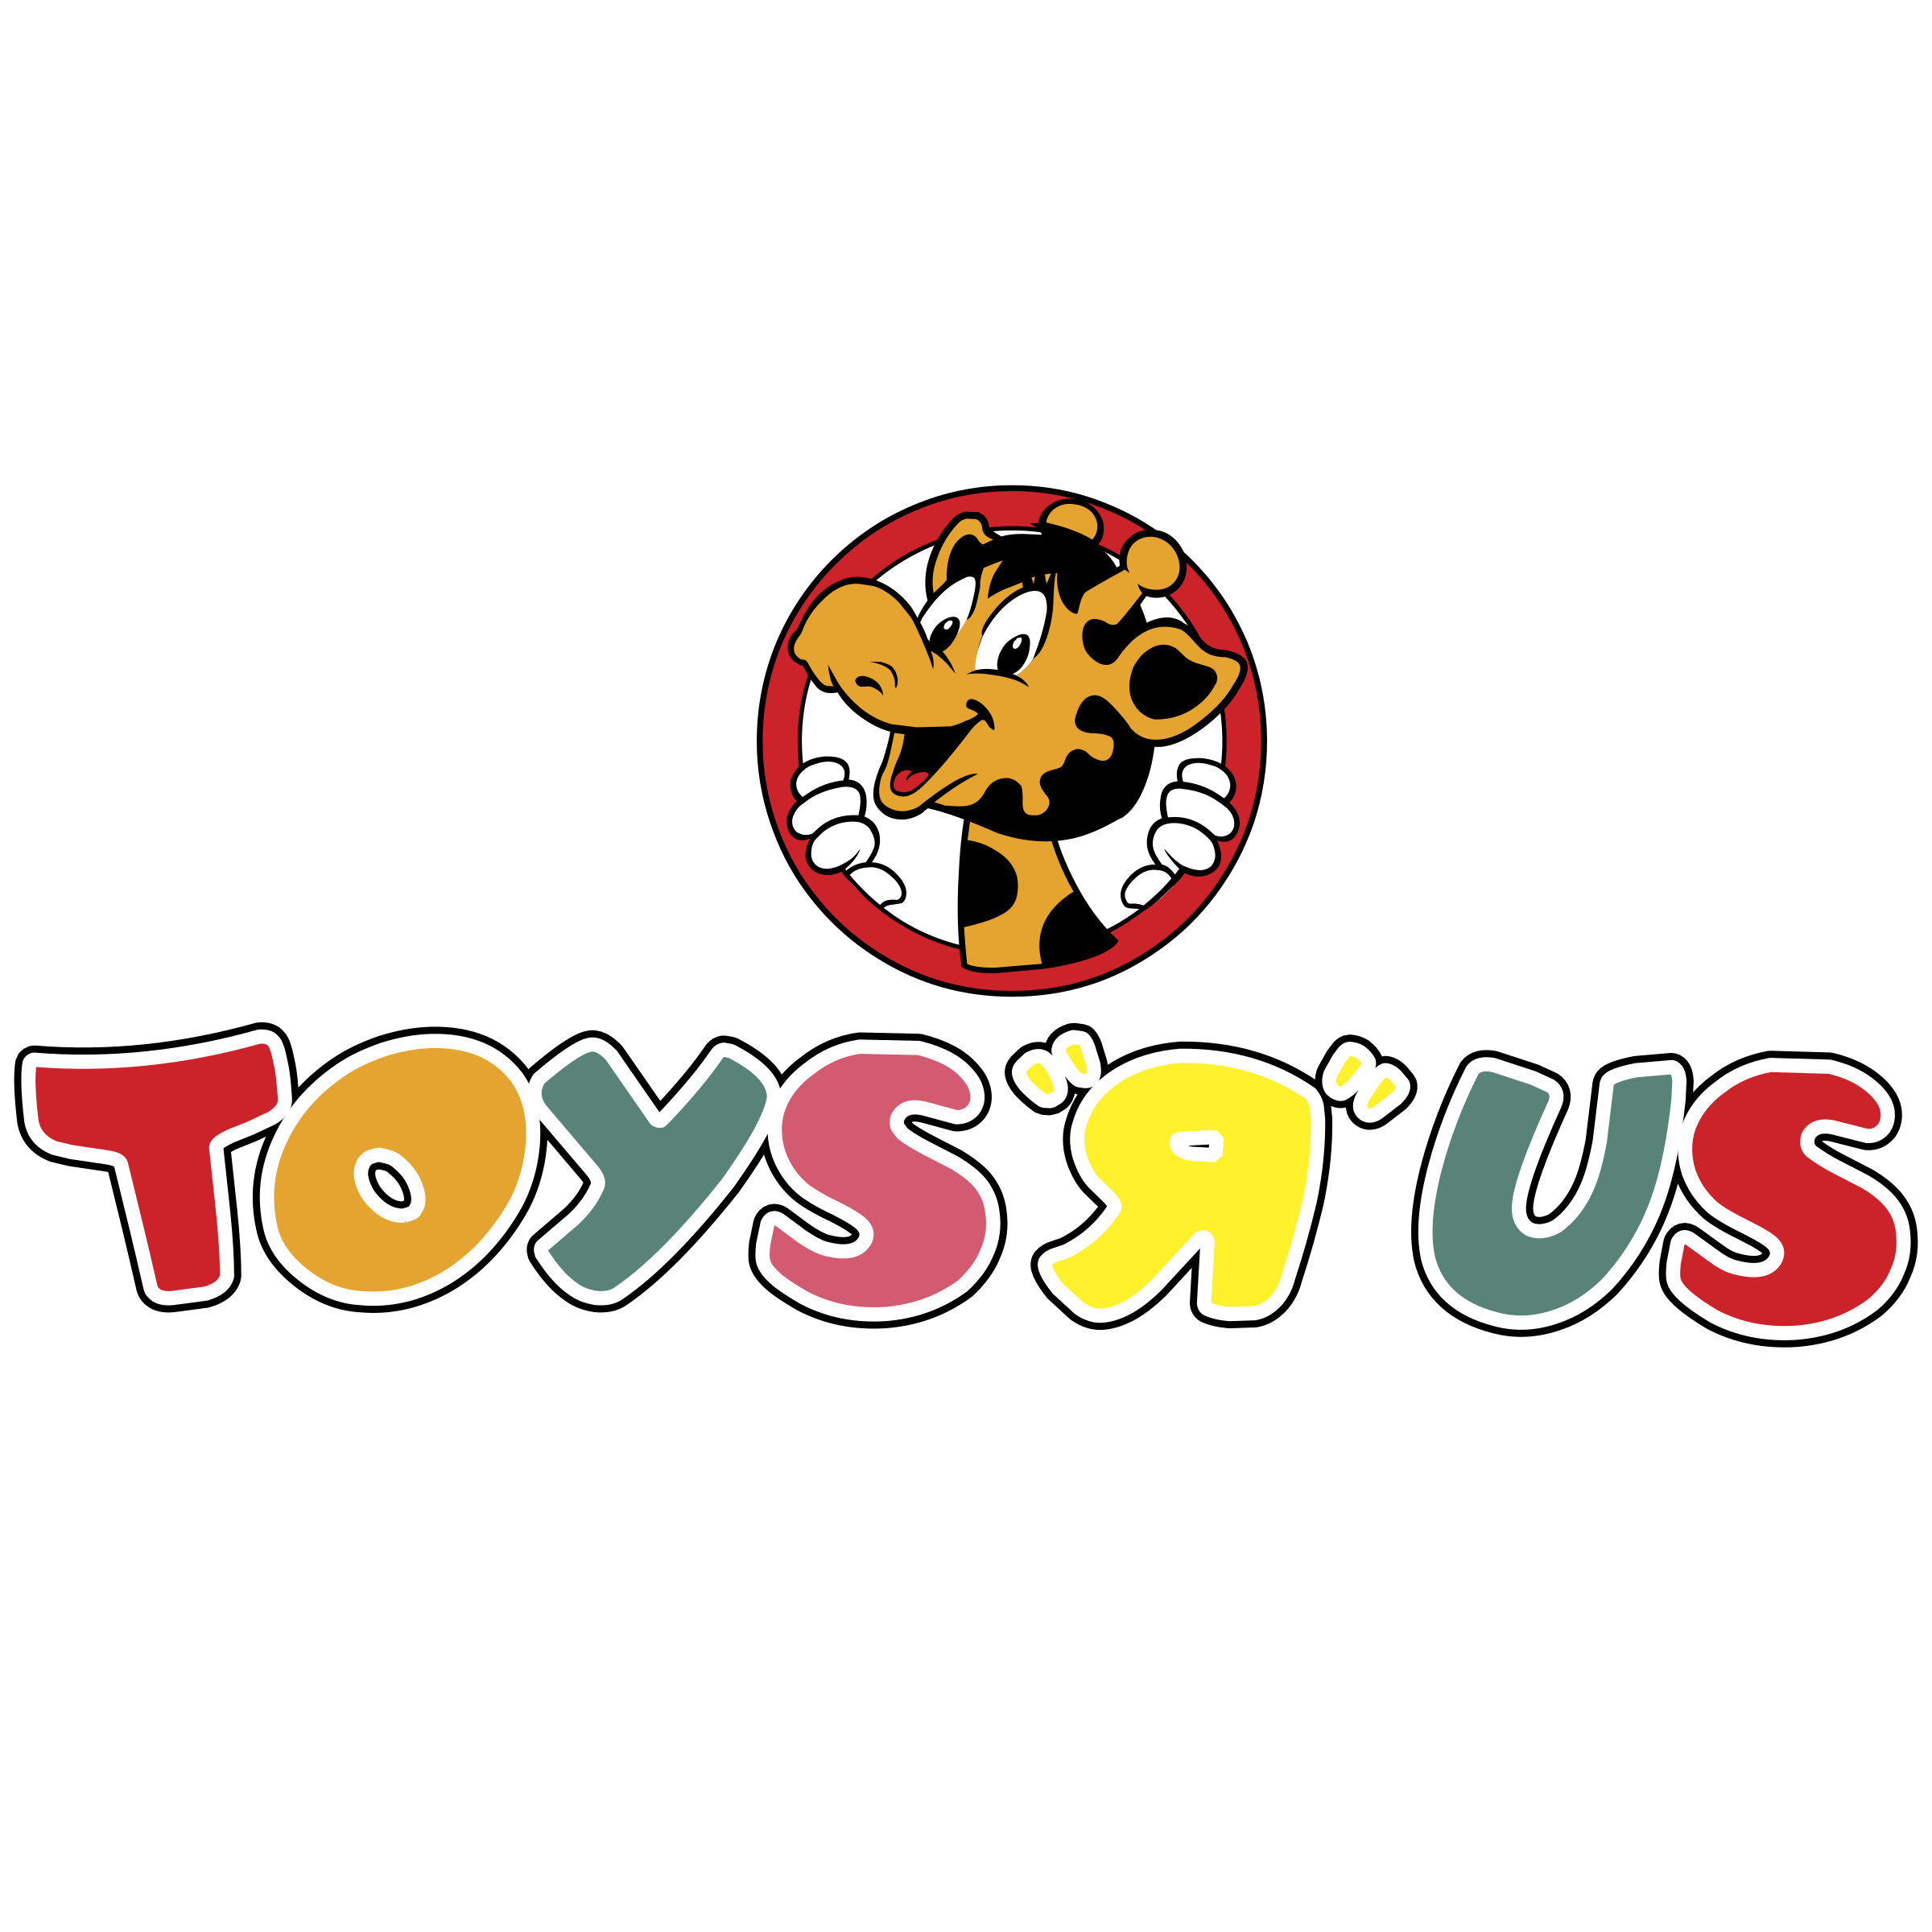 Toys R Us Logo - Toys R Us Logo PNG Transparent & SVG Vector - Freebie Supply